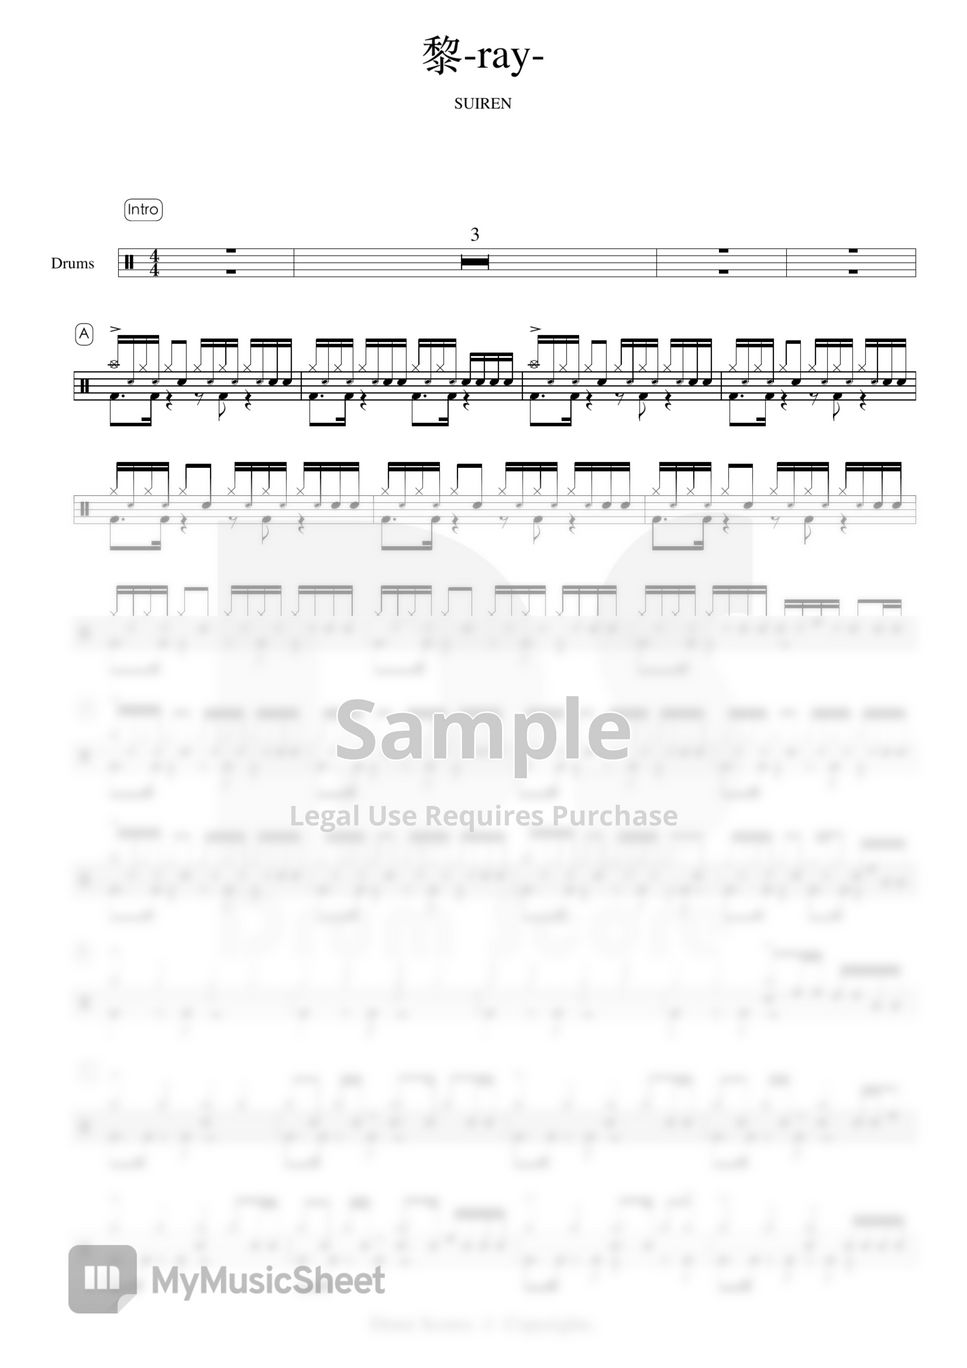 SUIREN - 黎-ray- (鼓譜) by Scoresdrum